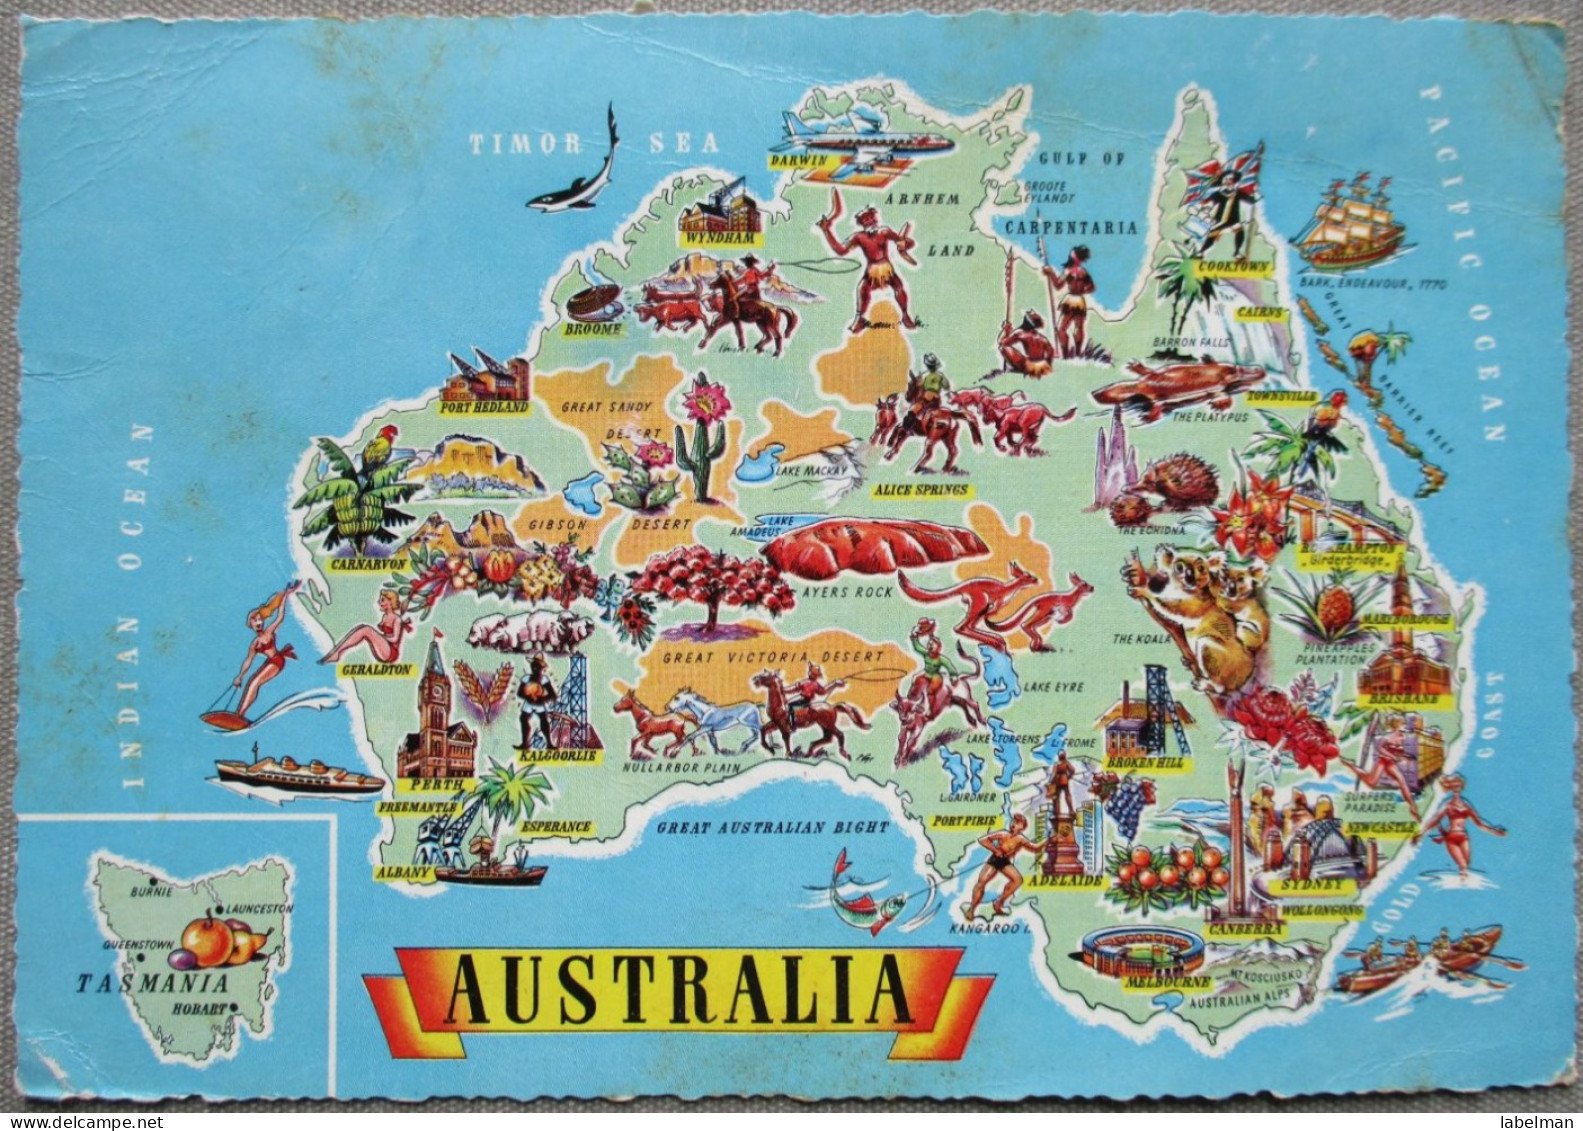 AUSTRALIA PICTORICAL MAP POSTKARTE POSTCARD ANSICHTSKARTE CARTE POSTALE CARTOLINA CARD - Melbourne